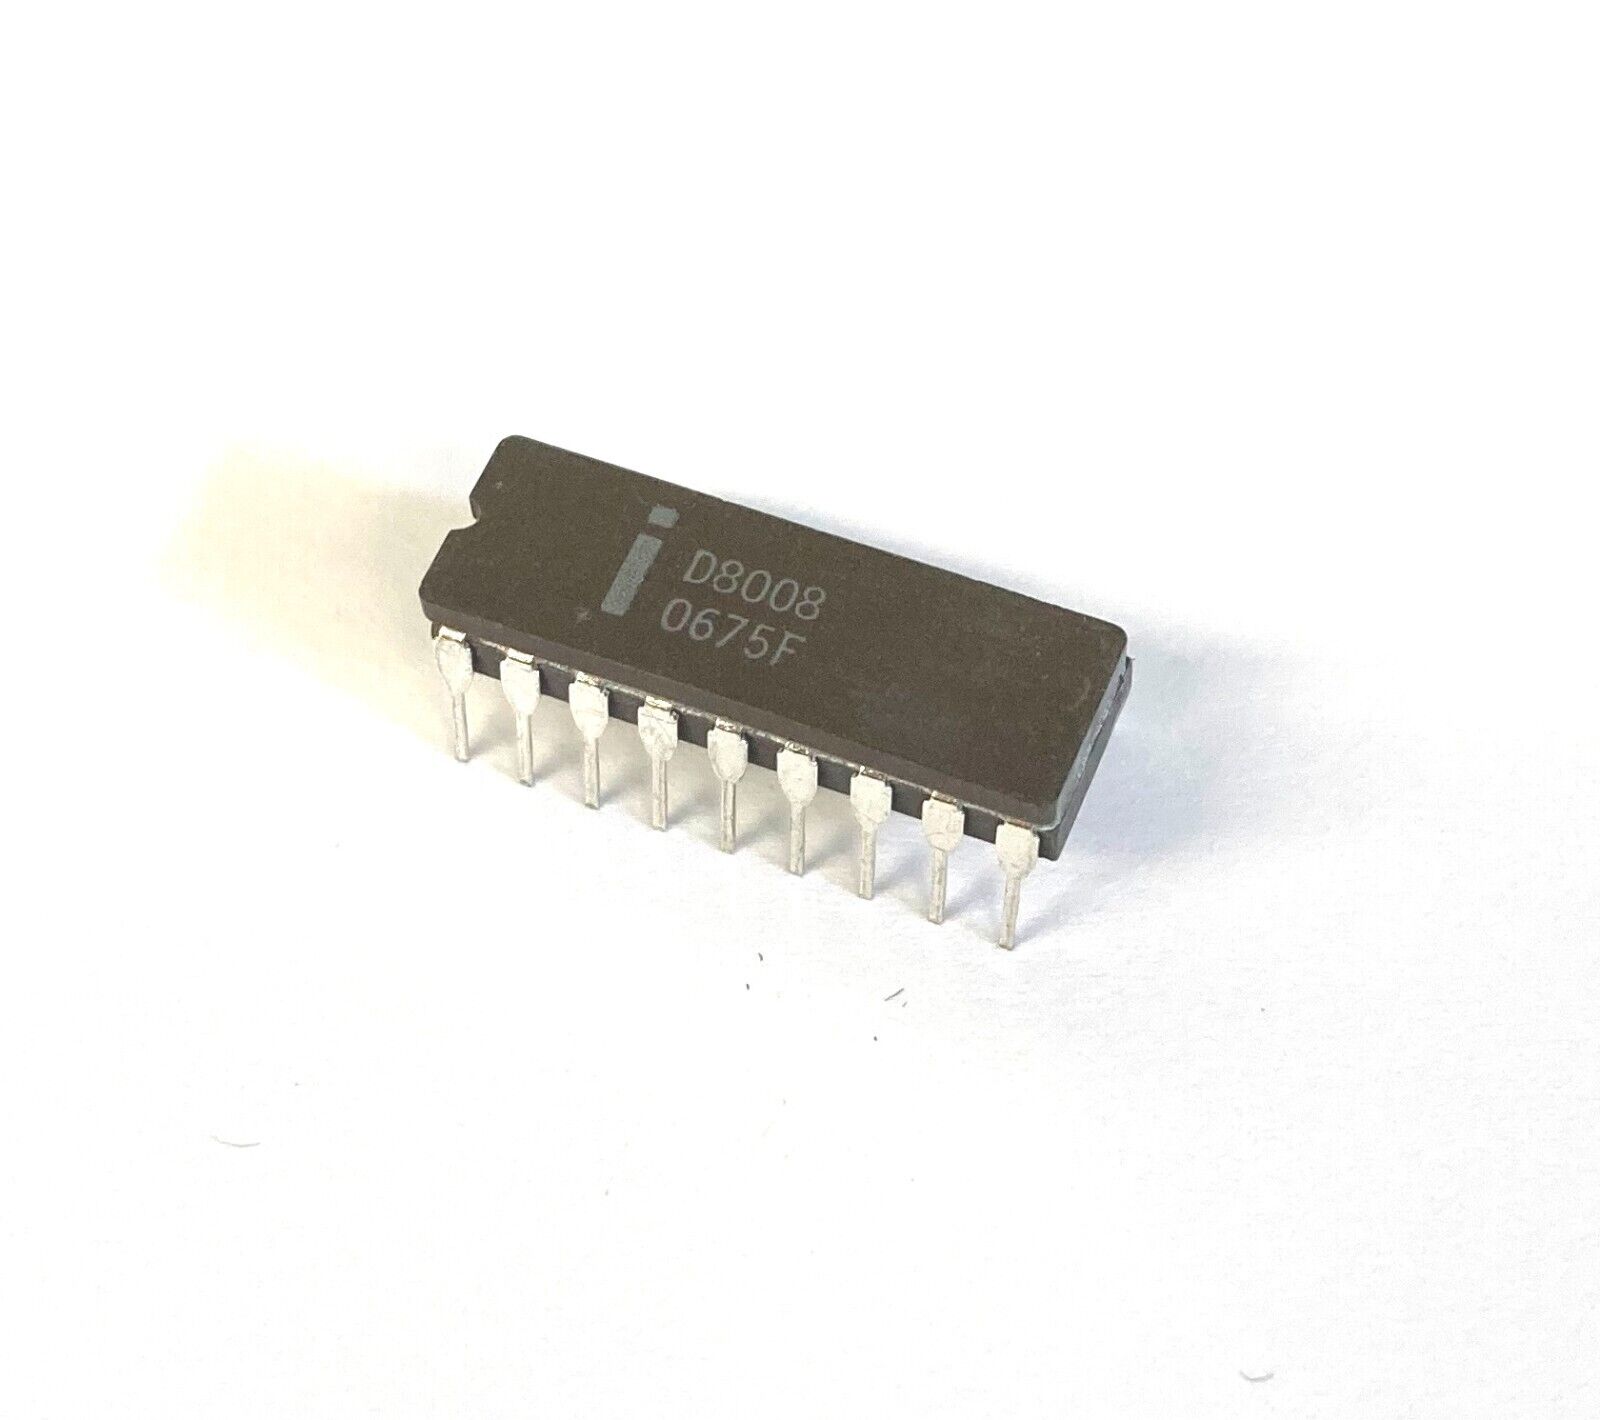 Intel D8008 18 Pin Ceramic Dip 8-Bit Microprocessor CPU MOS MCS-8 Microcomputer 